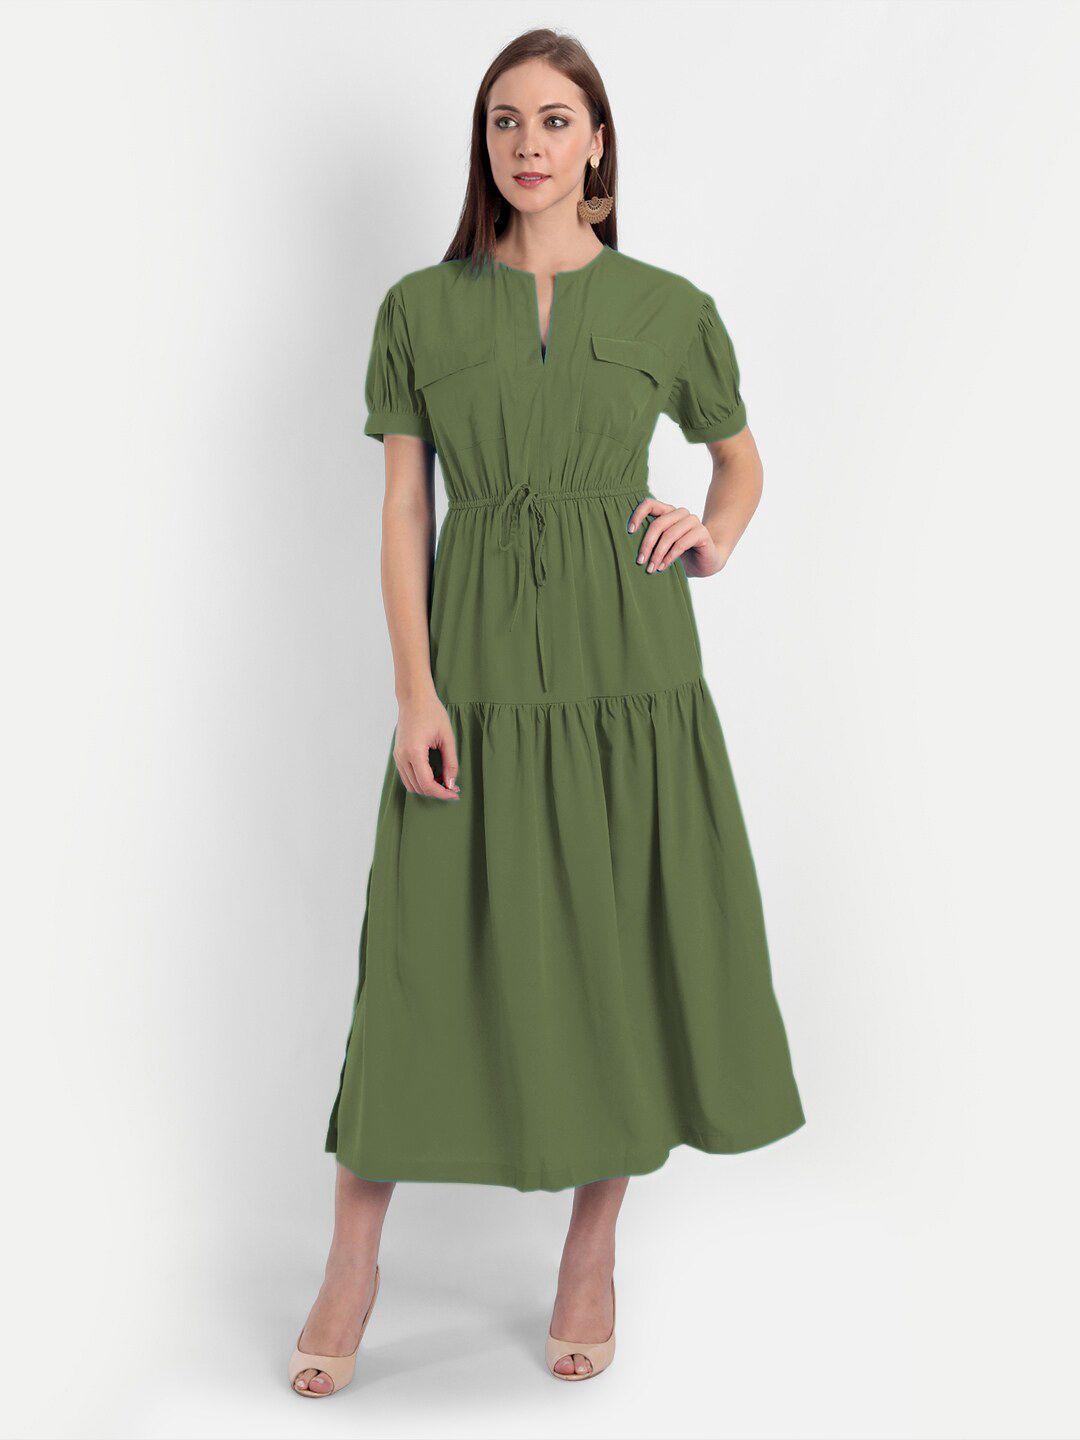 minglay olive green organic cotton crepe midi dress